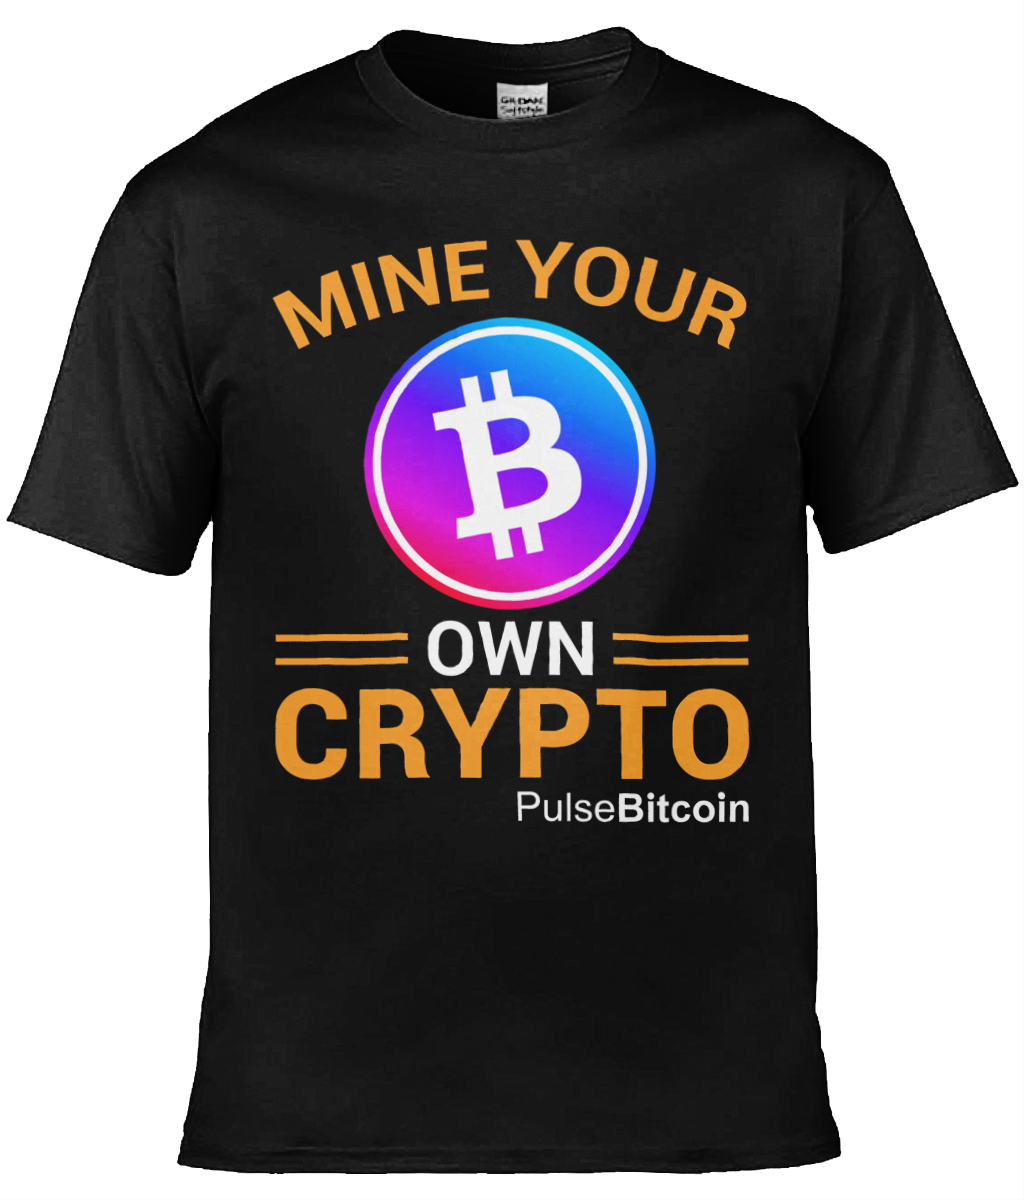 Mine Your Own Crypto T-shirt, PulseBitcoin Unisex T-shirt